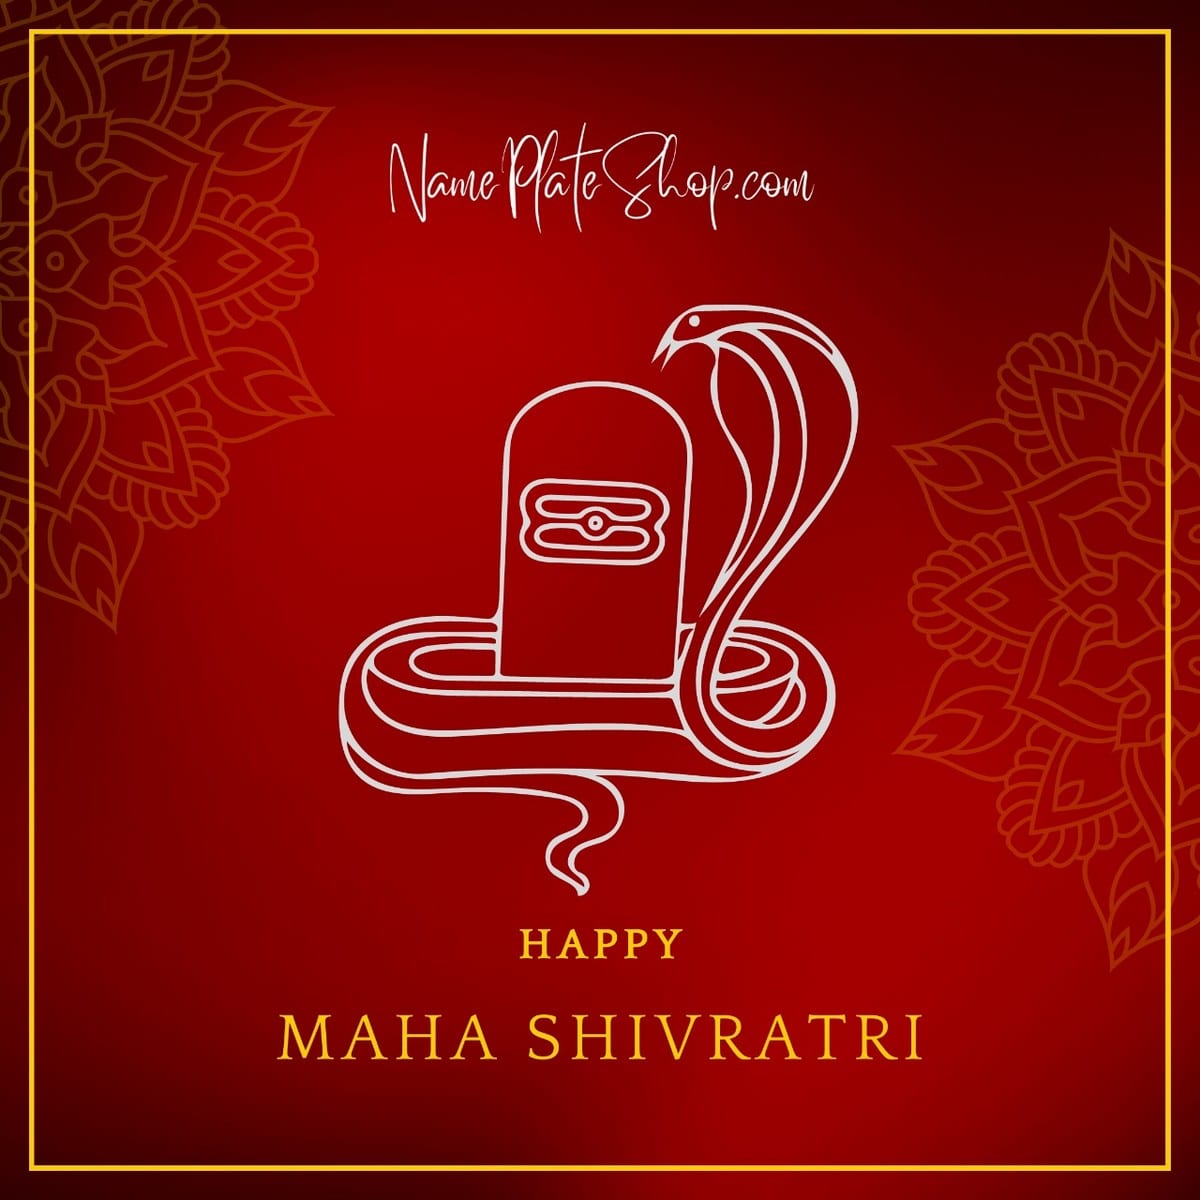 Wishing Happy Mahashivratri To All Of You